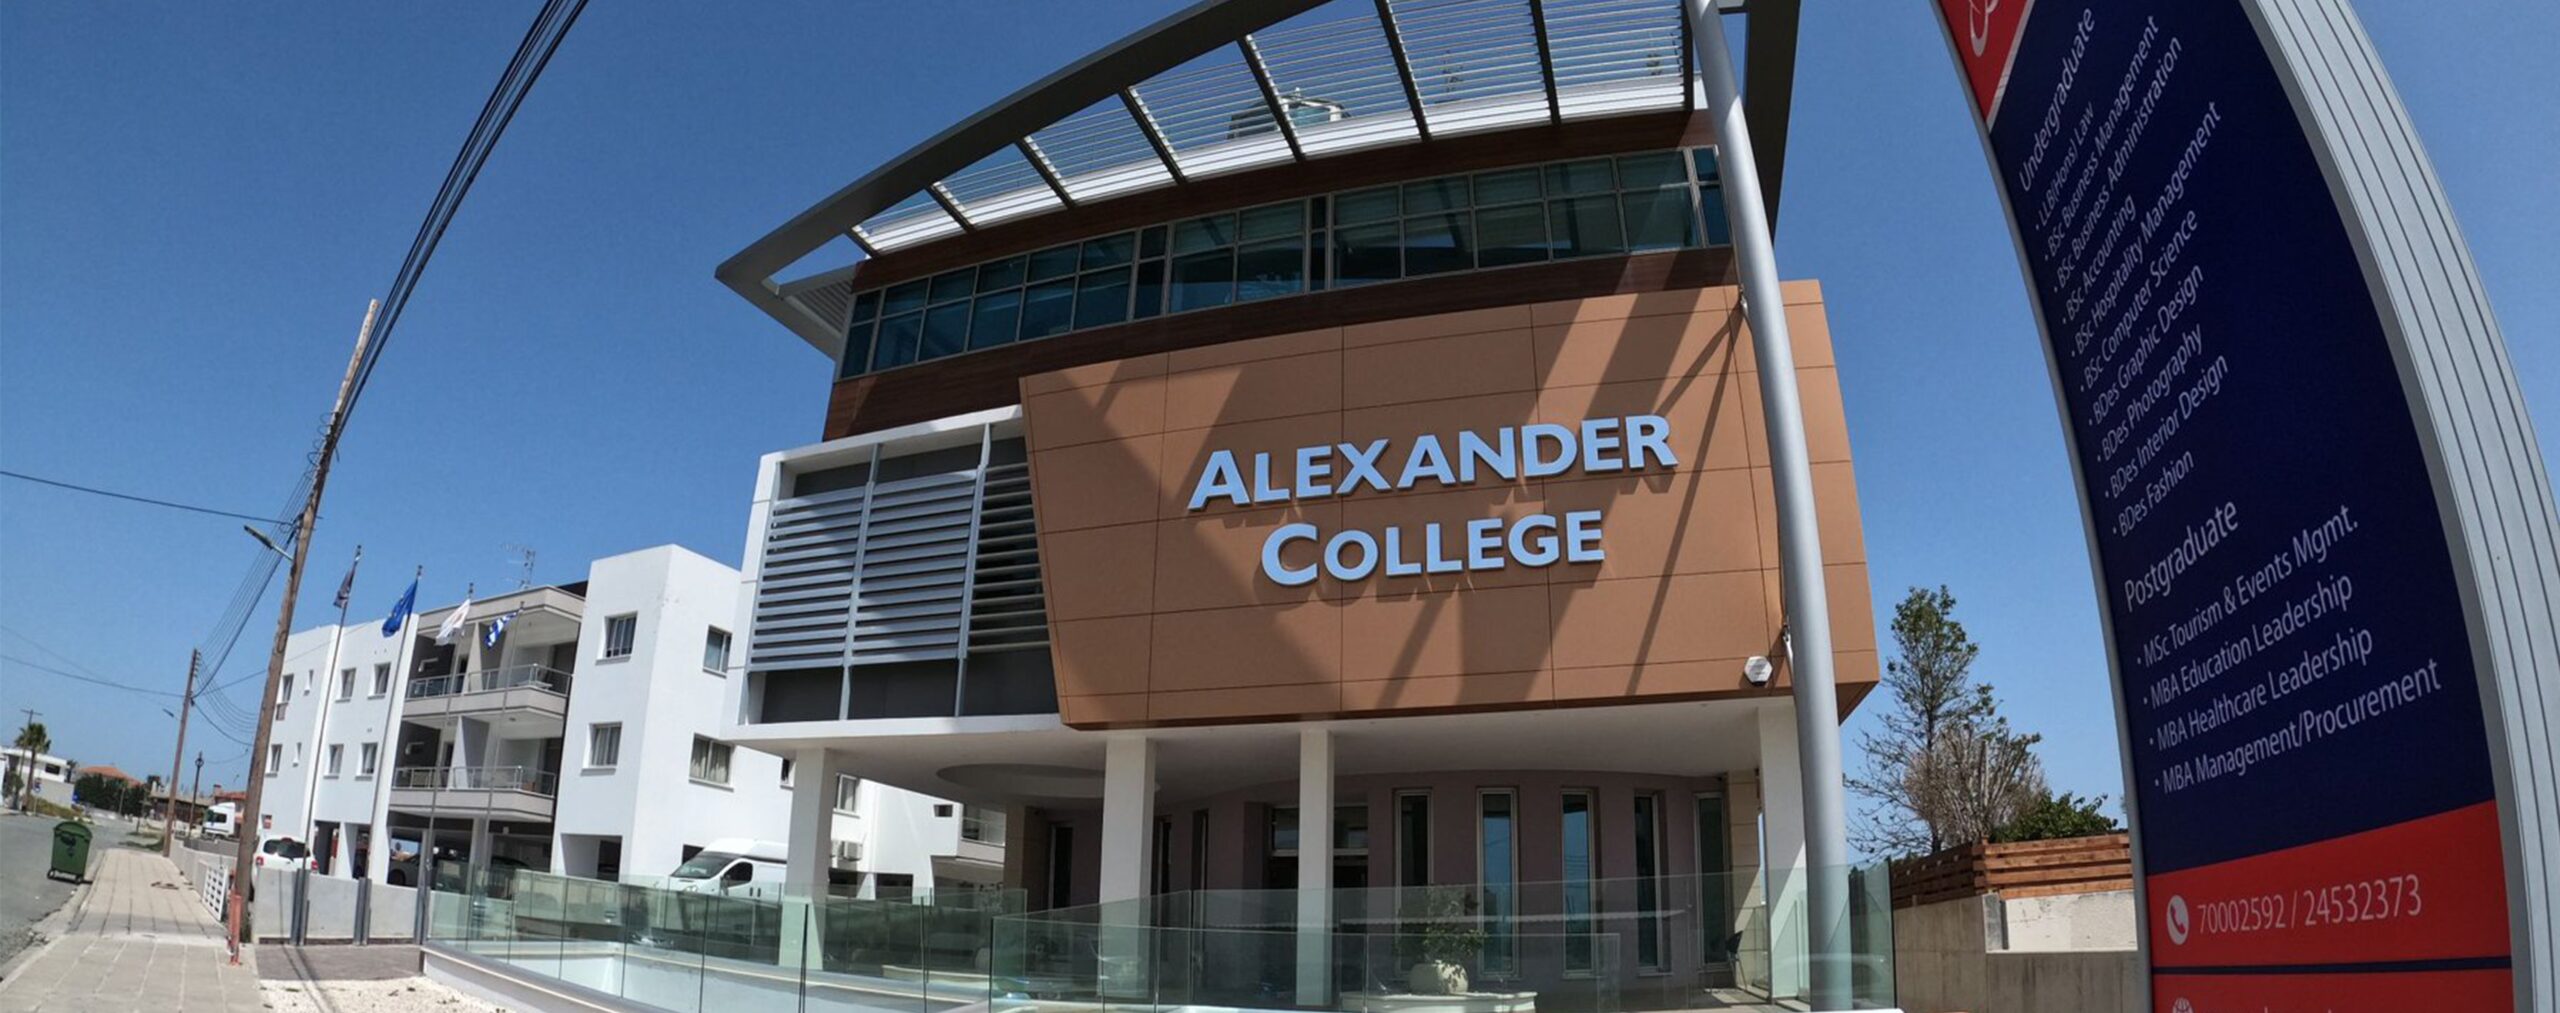 alexander college